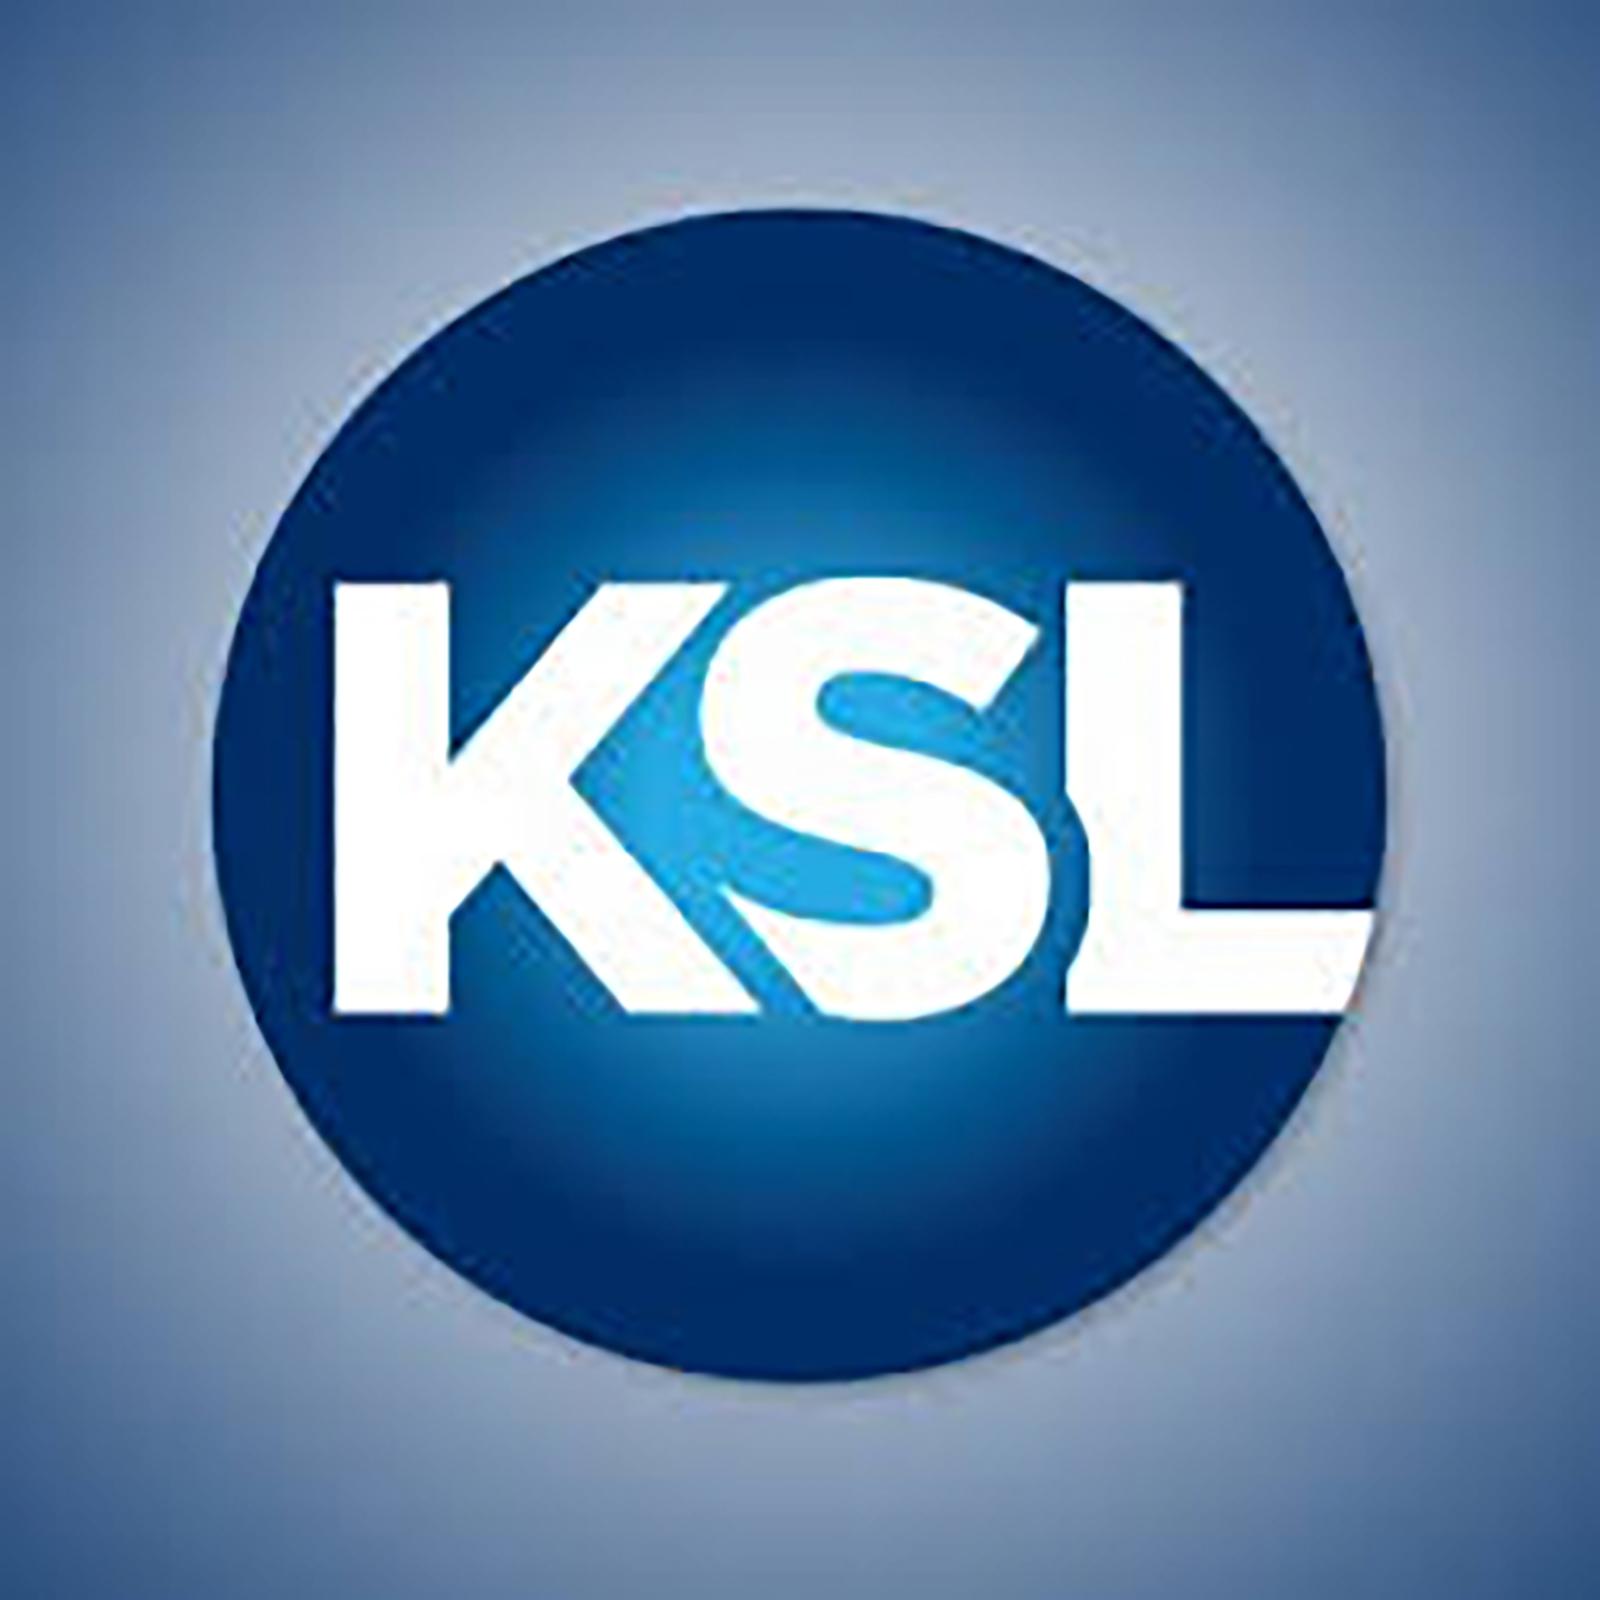 KSL Logo - KSL News at Noon Browser Segment. Digital Smart Media Advertising Agency